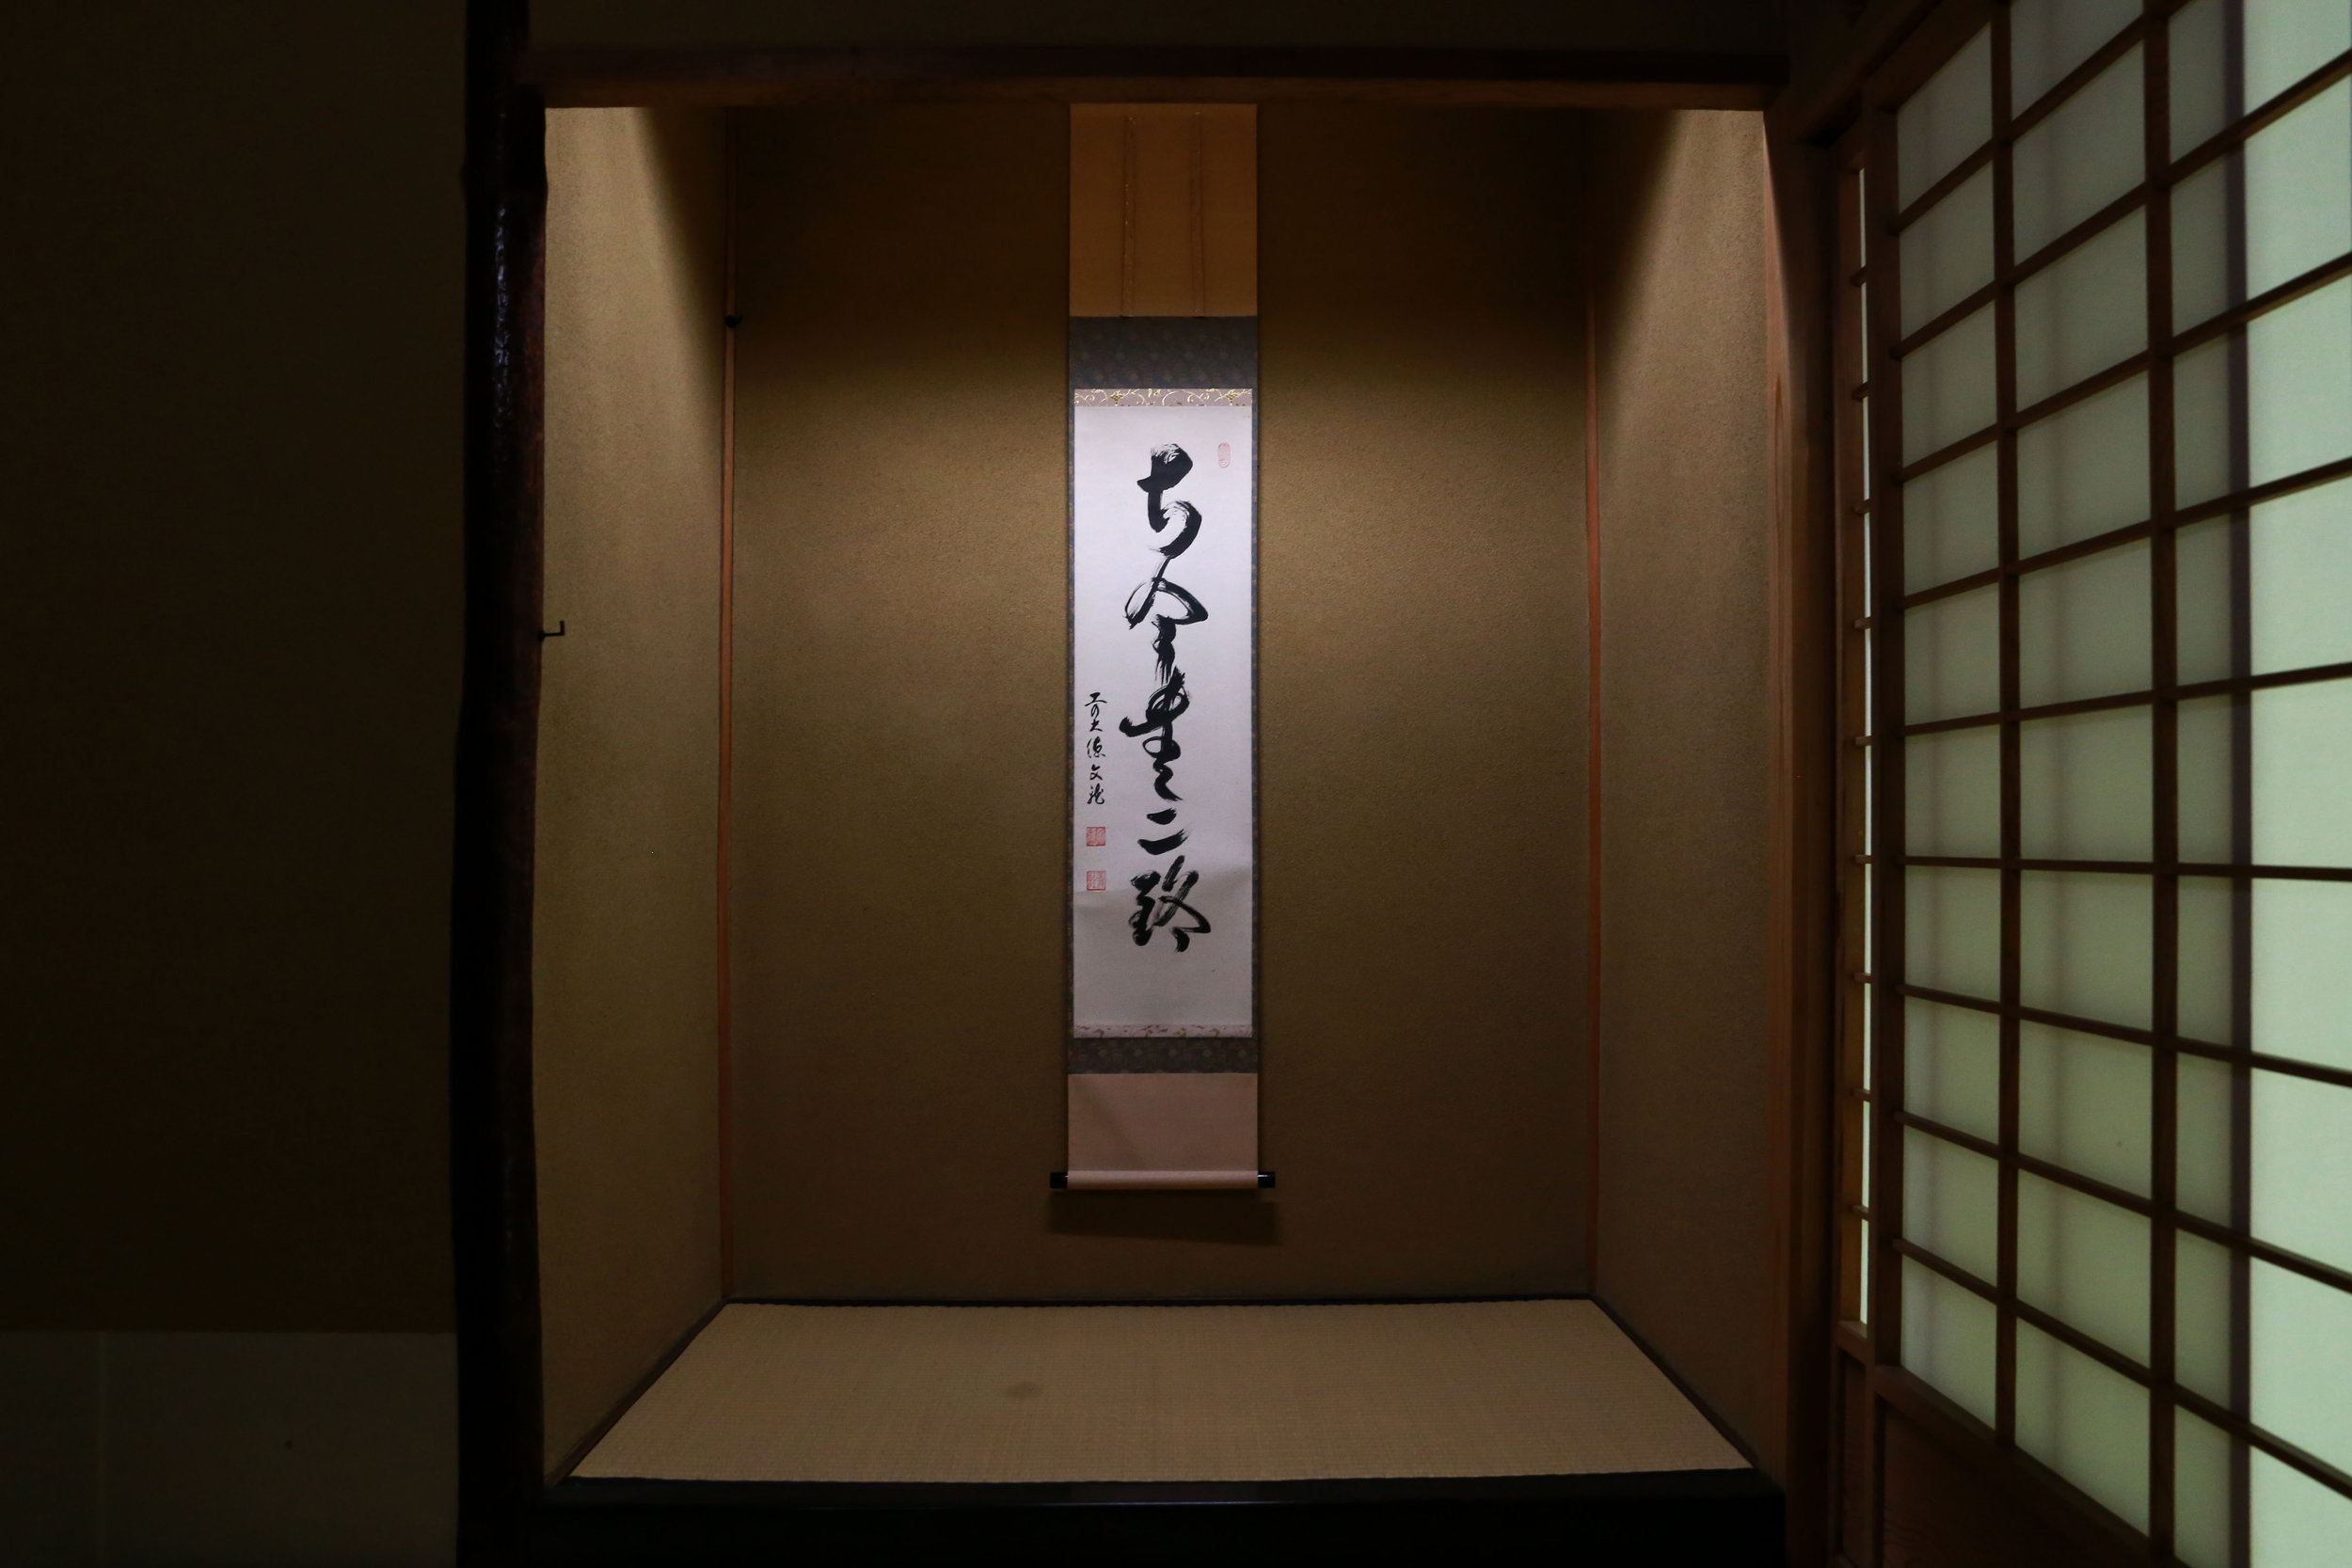  A tokonoma alcove and a displayed hanging scroll in the Rakusui-en’s tea room in Fukuoka, Japan, June 22, 2018. 